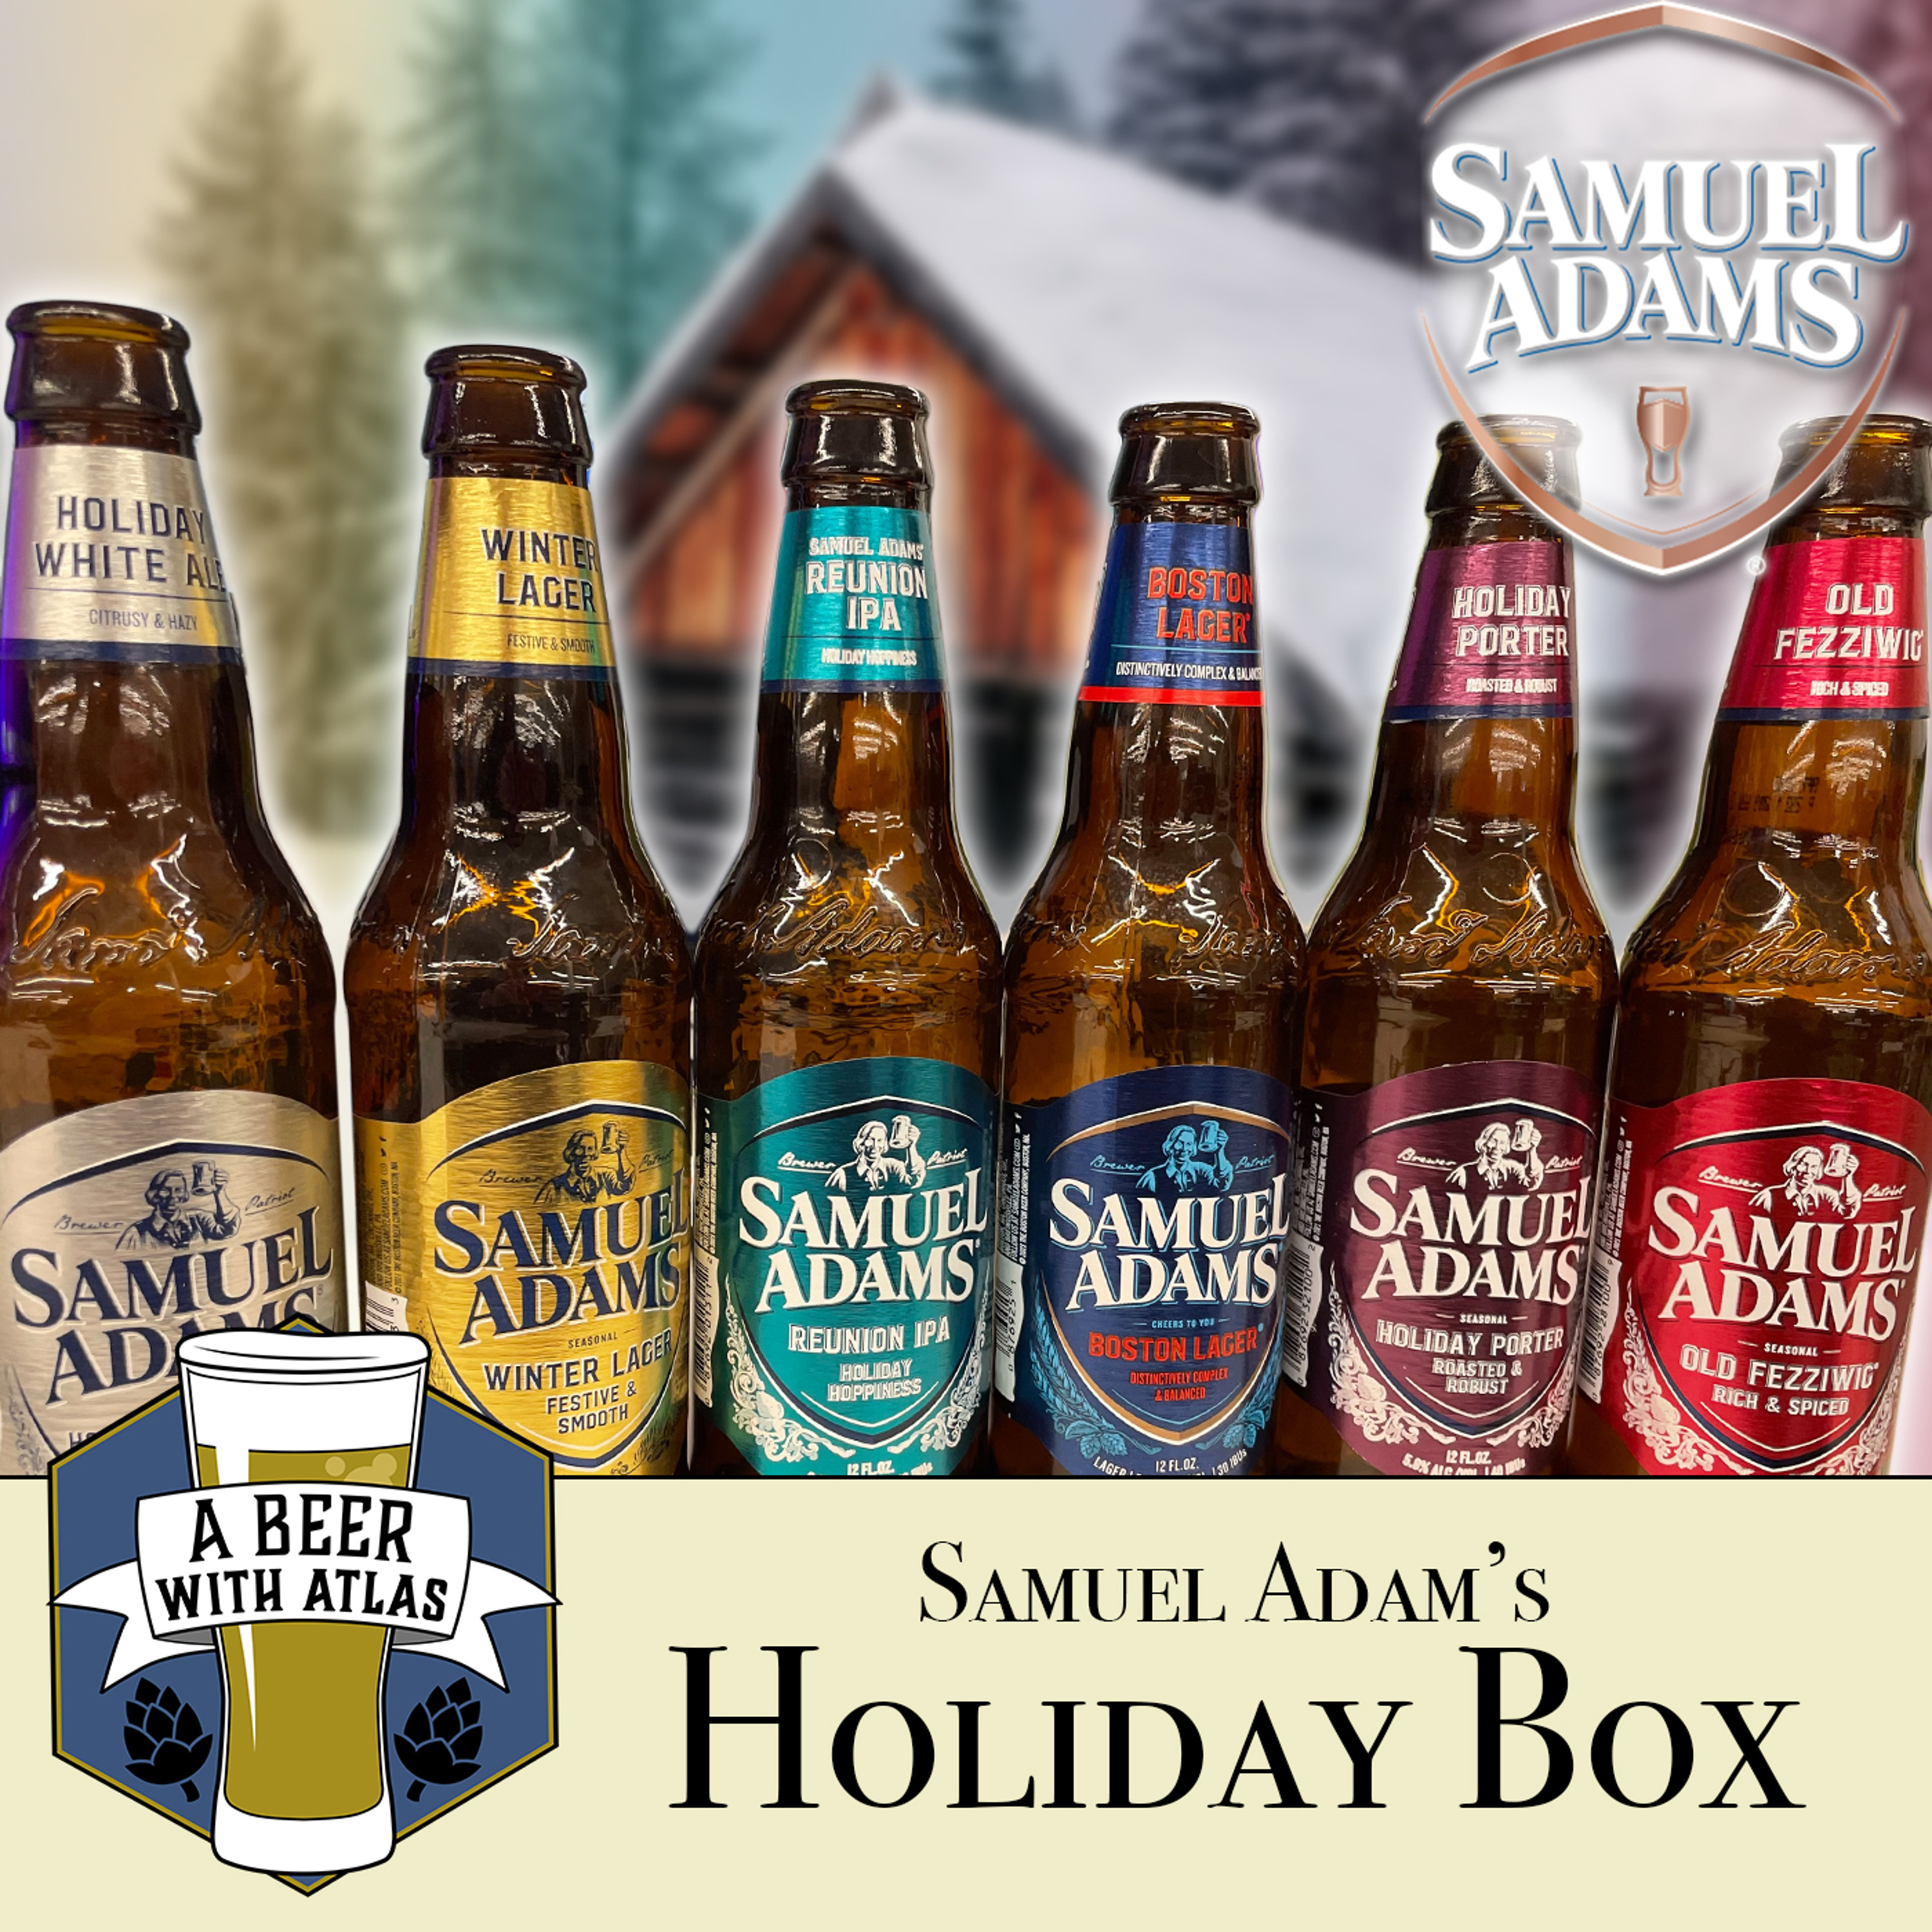 Samuel Adams' Holiday Box - A Beer with Atlas 175